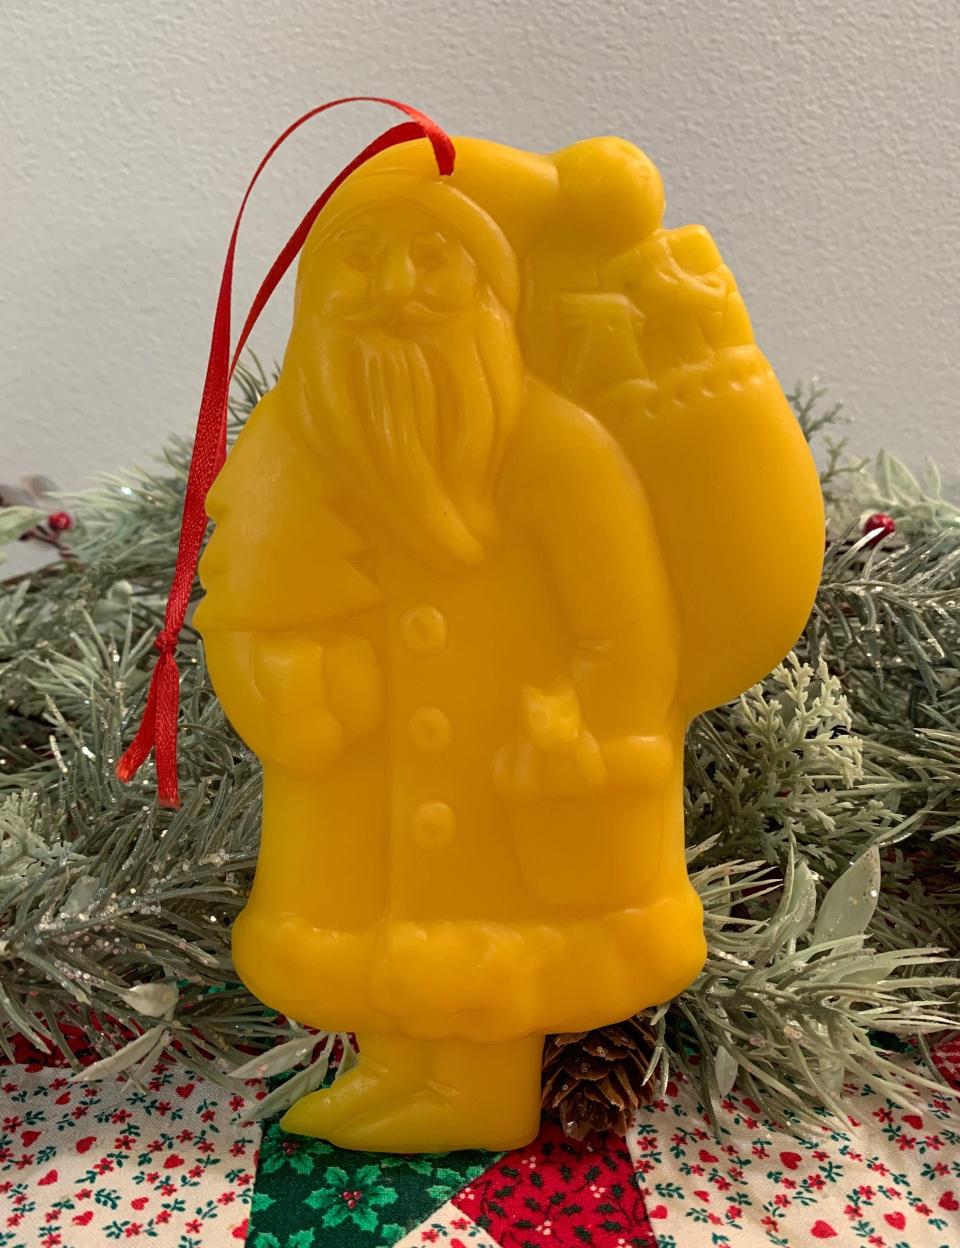 Beeswax Saint Nicholas Ornament